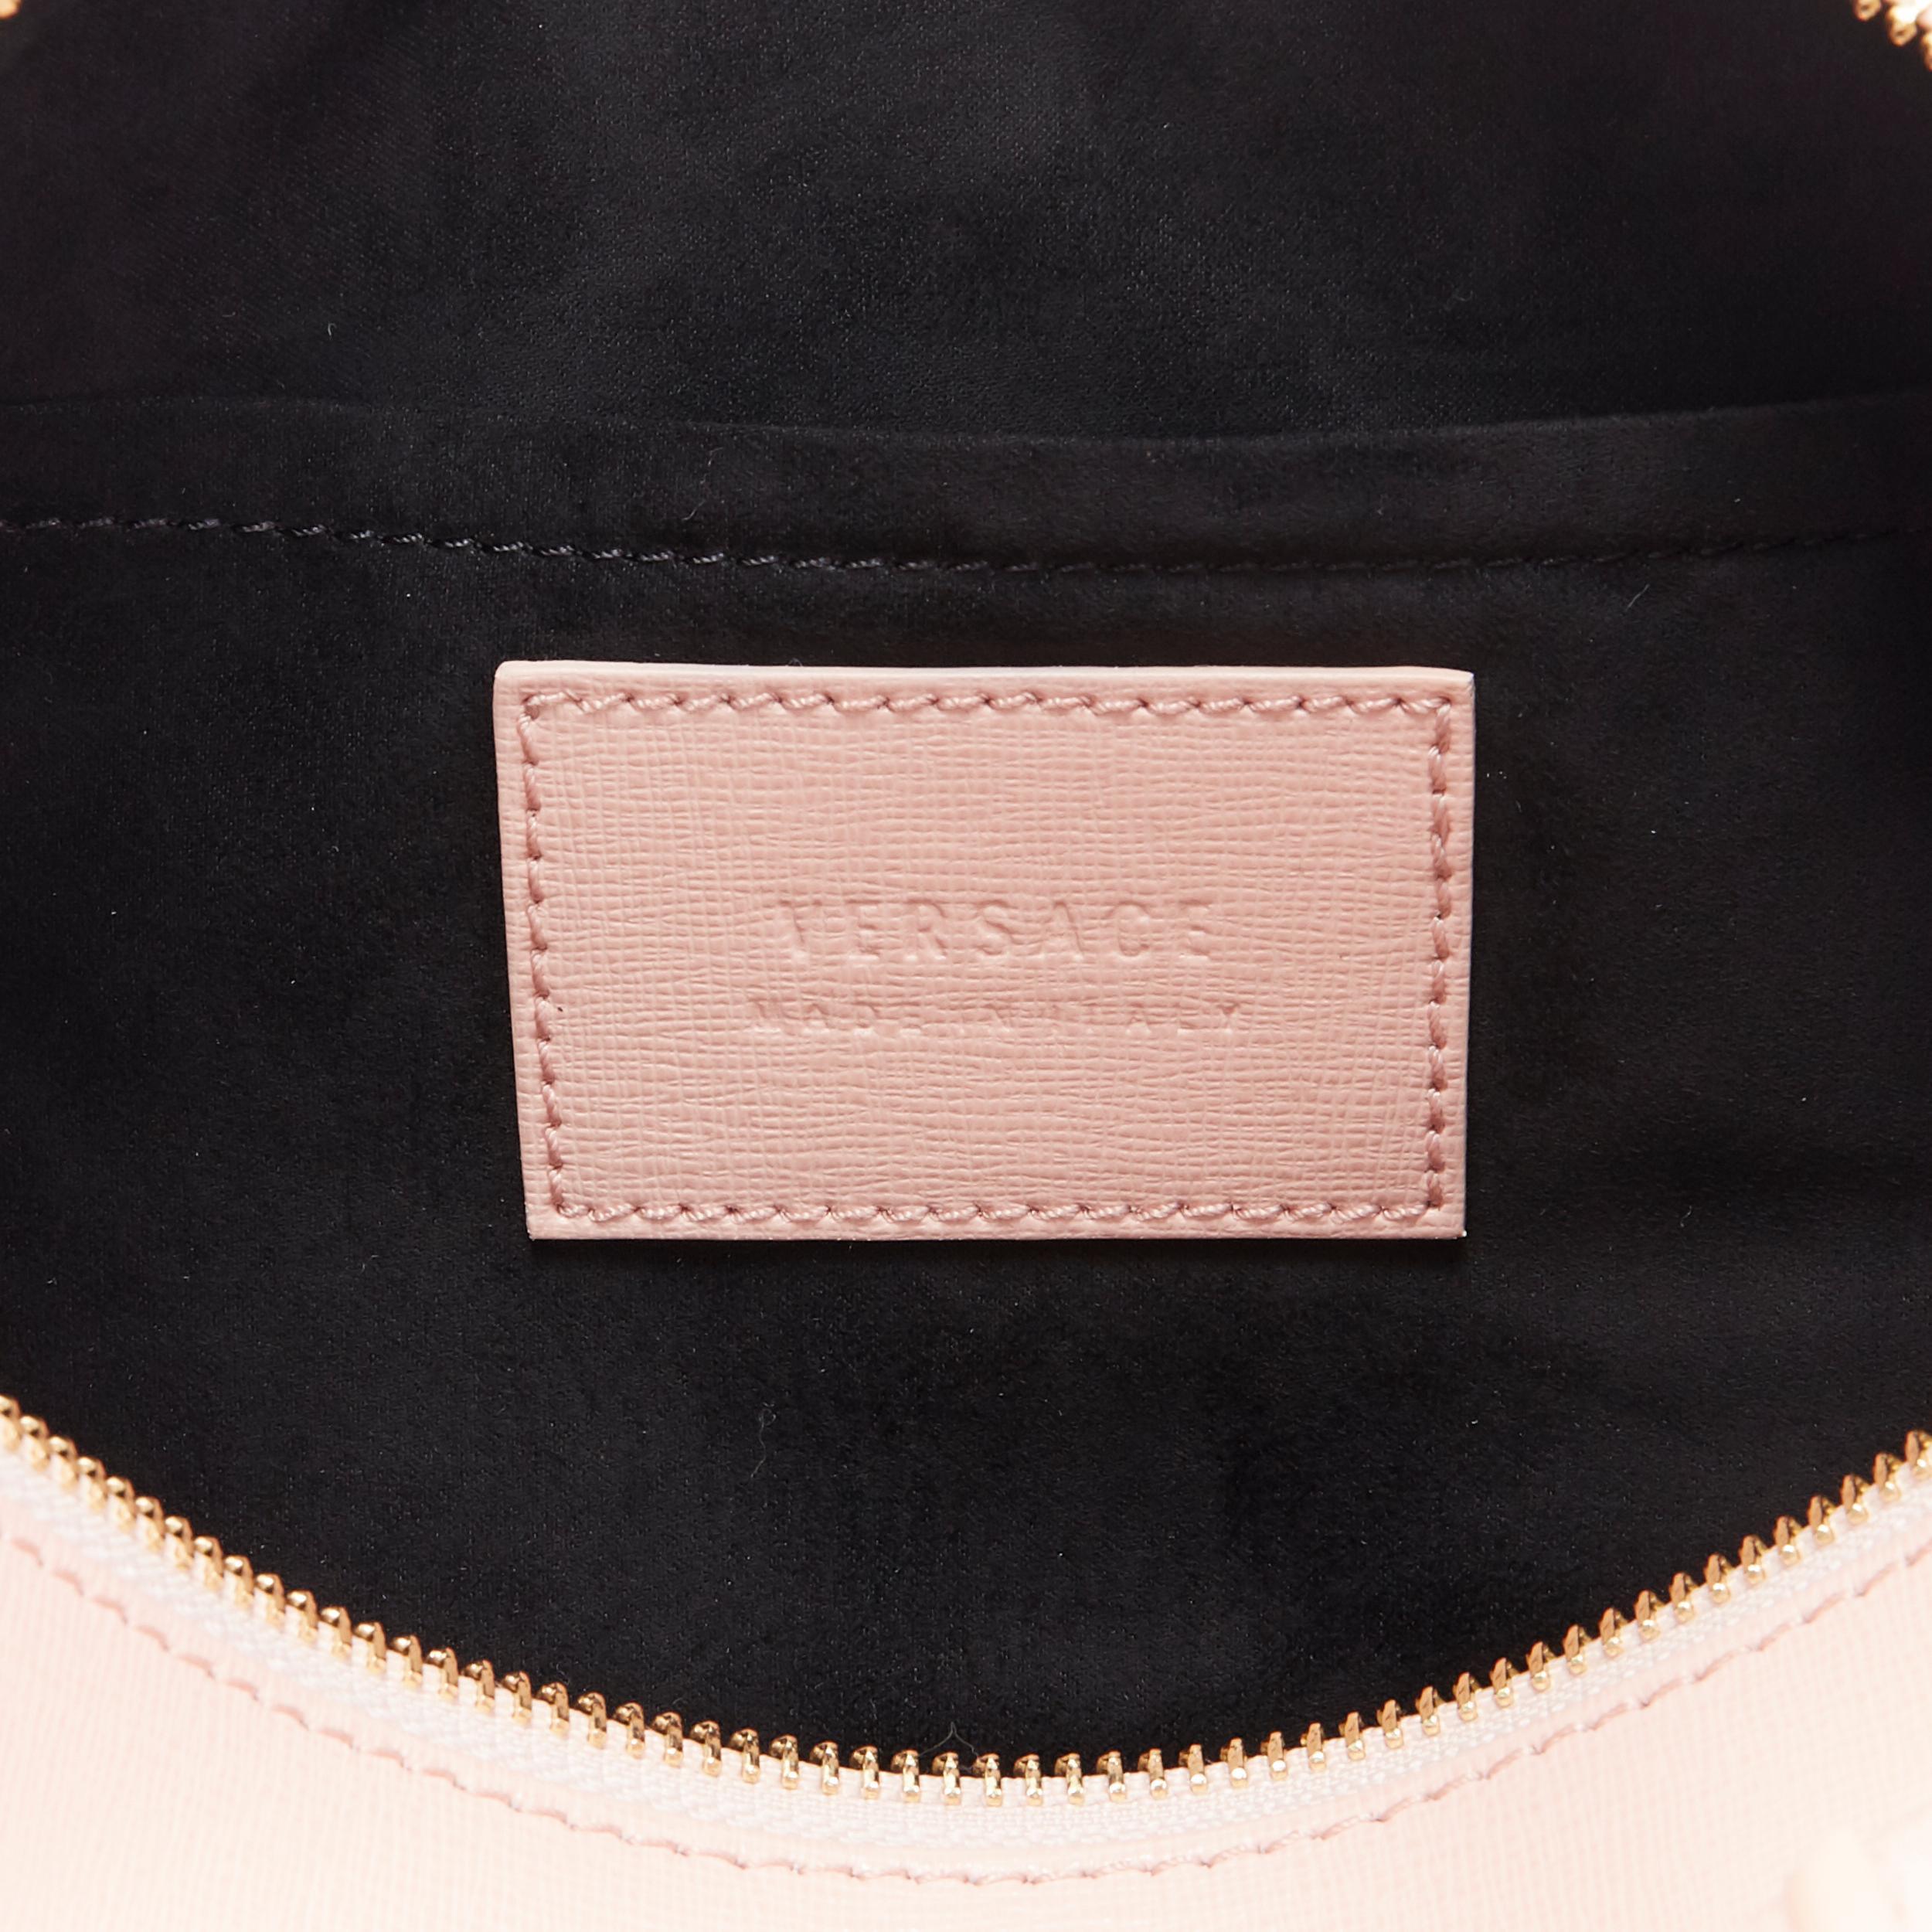 new VERSACE Palazzo Medusa pink saffiano leather large speedy boston cross bag 6